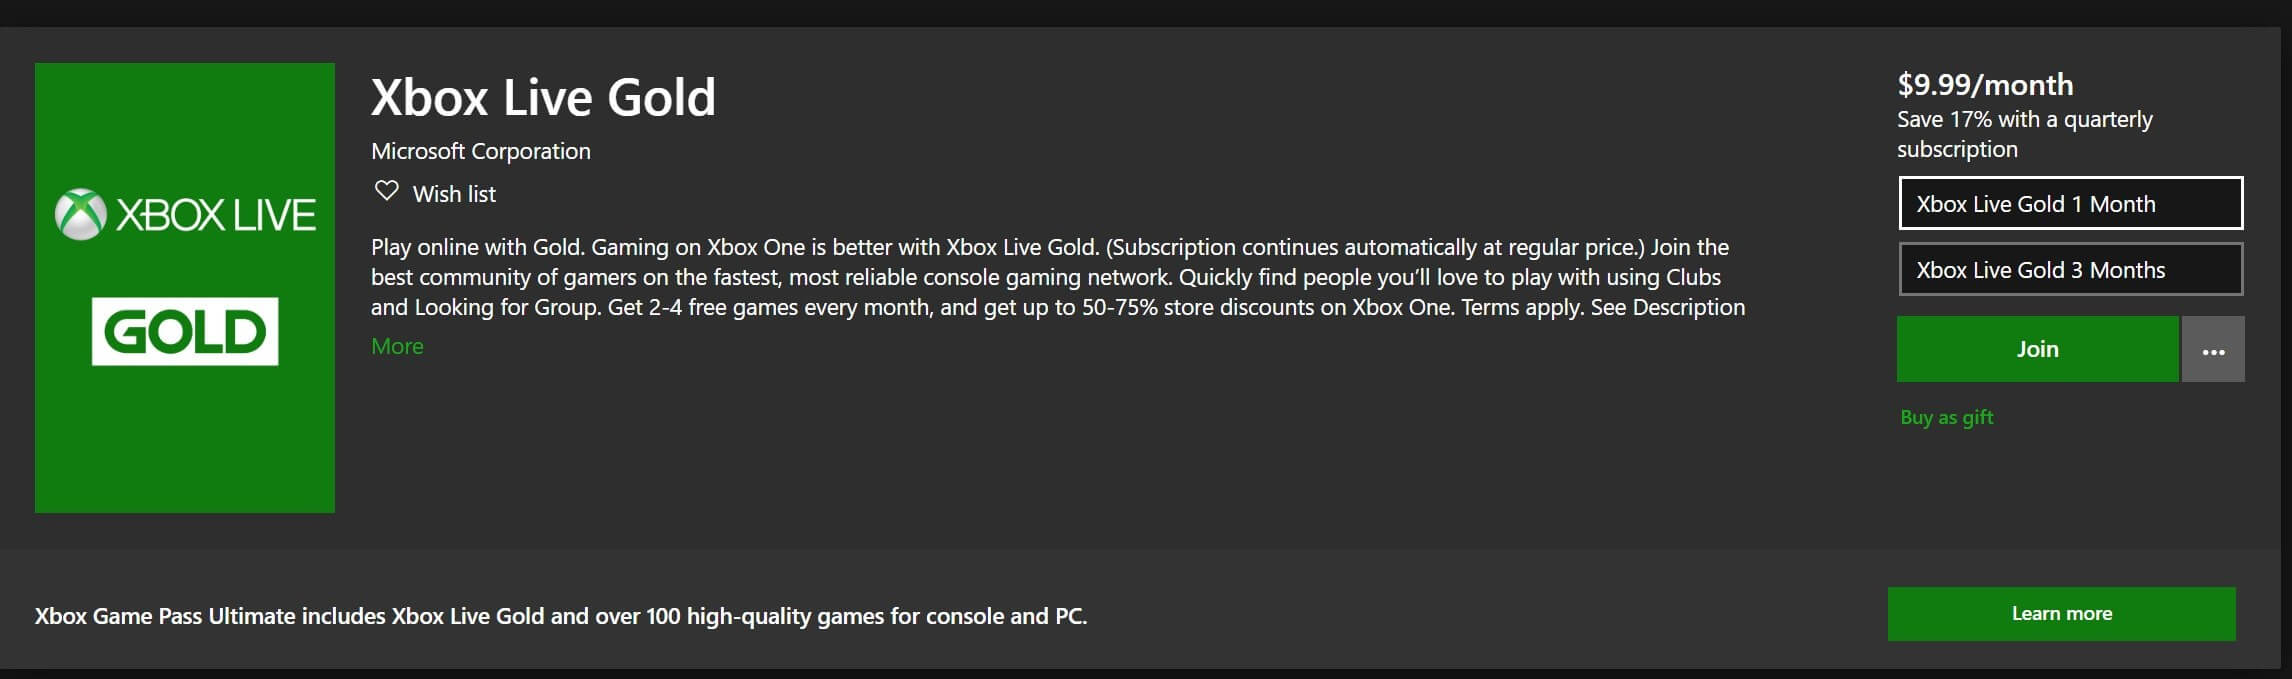 Xbox Live Gold assinatura mensal